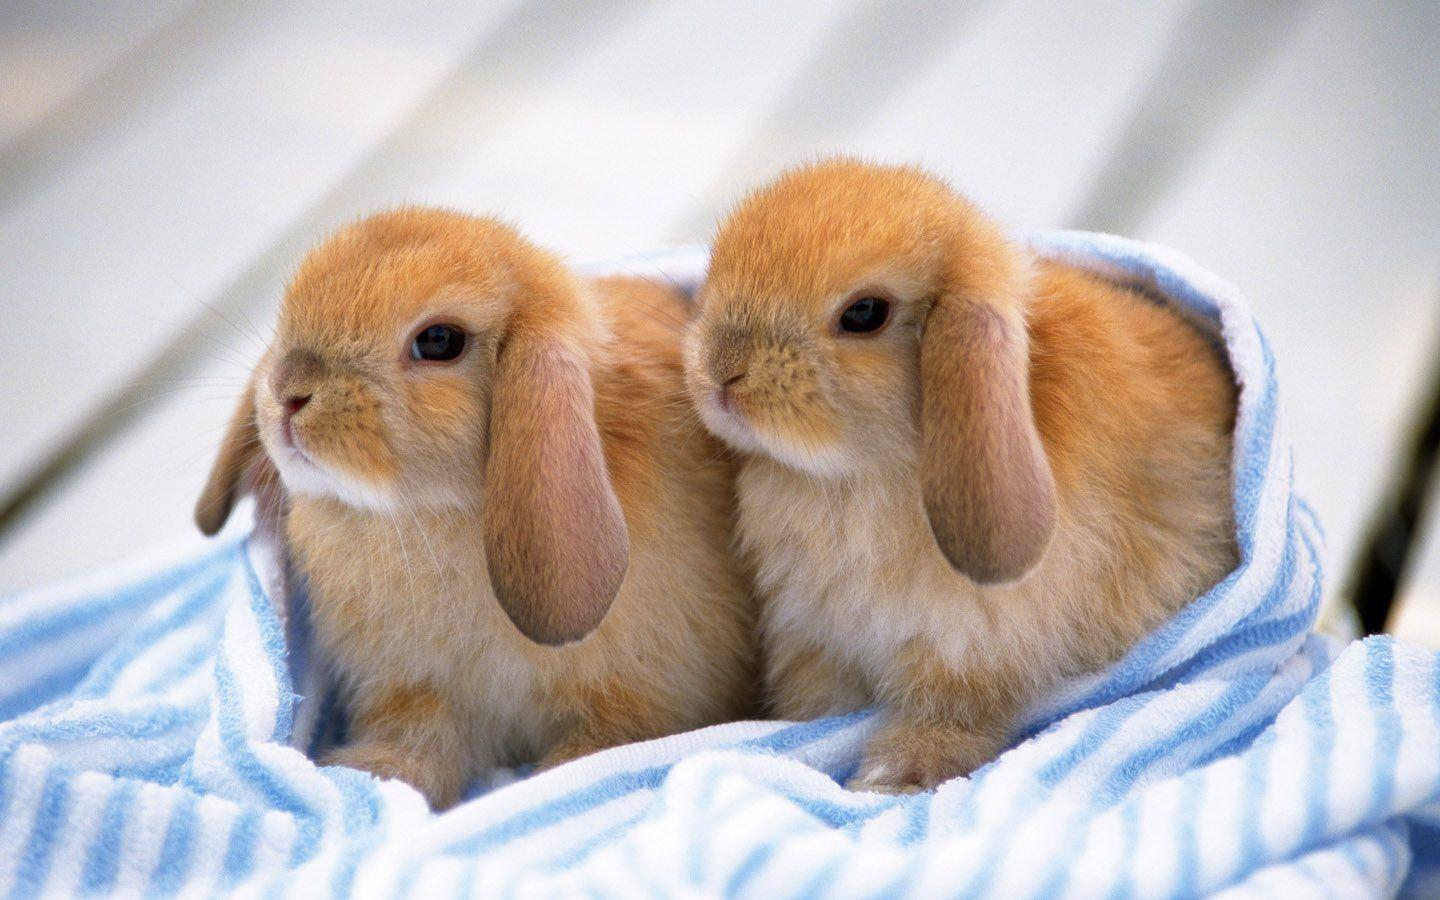 image For > Rabbits Wallpaper Desktop